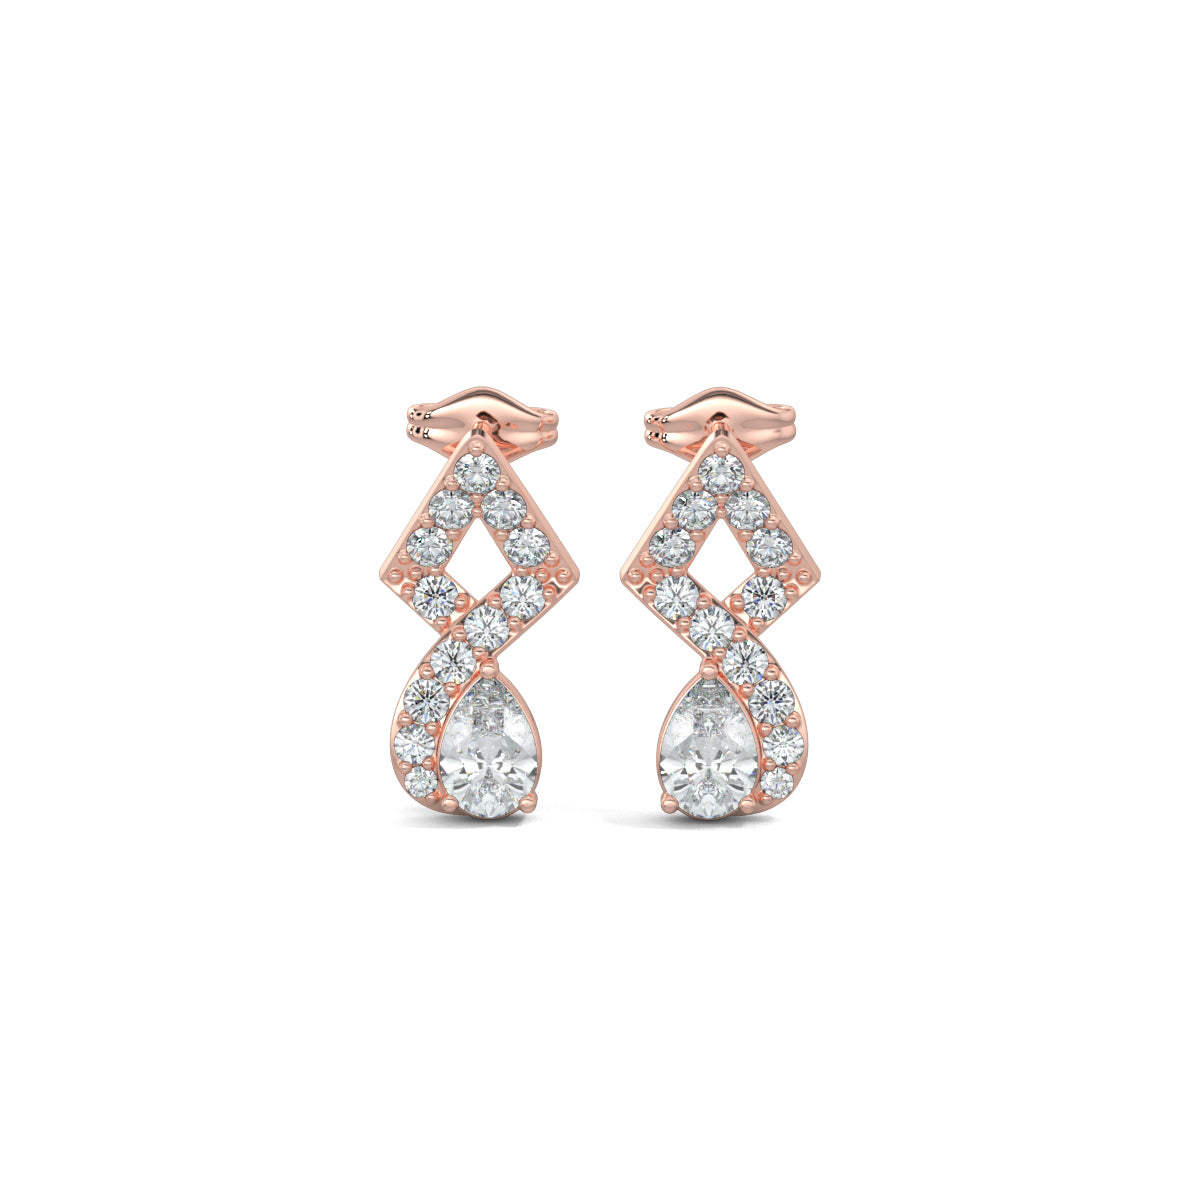 Rose Gold, Diamond Earrings, Twisted Elegance earrings, diamond earrings, natural diamonds, lab-grown diamonds, pear-cut diamonds, pave setting, mid-length earrings, traditional design, contemporary elegance